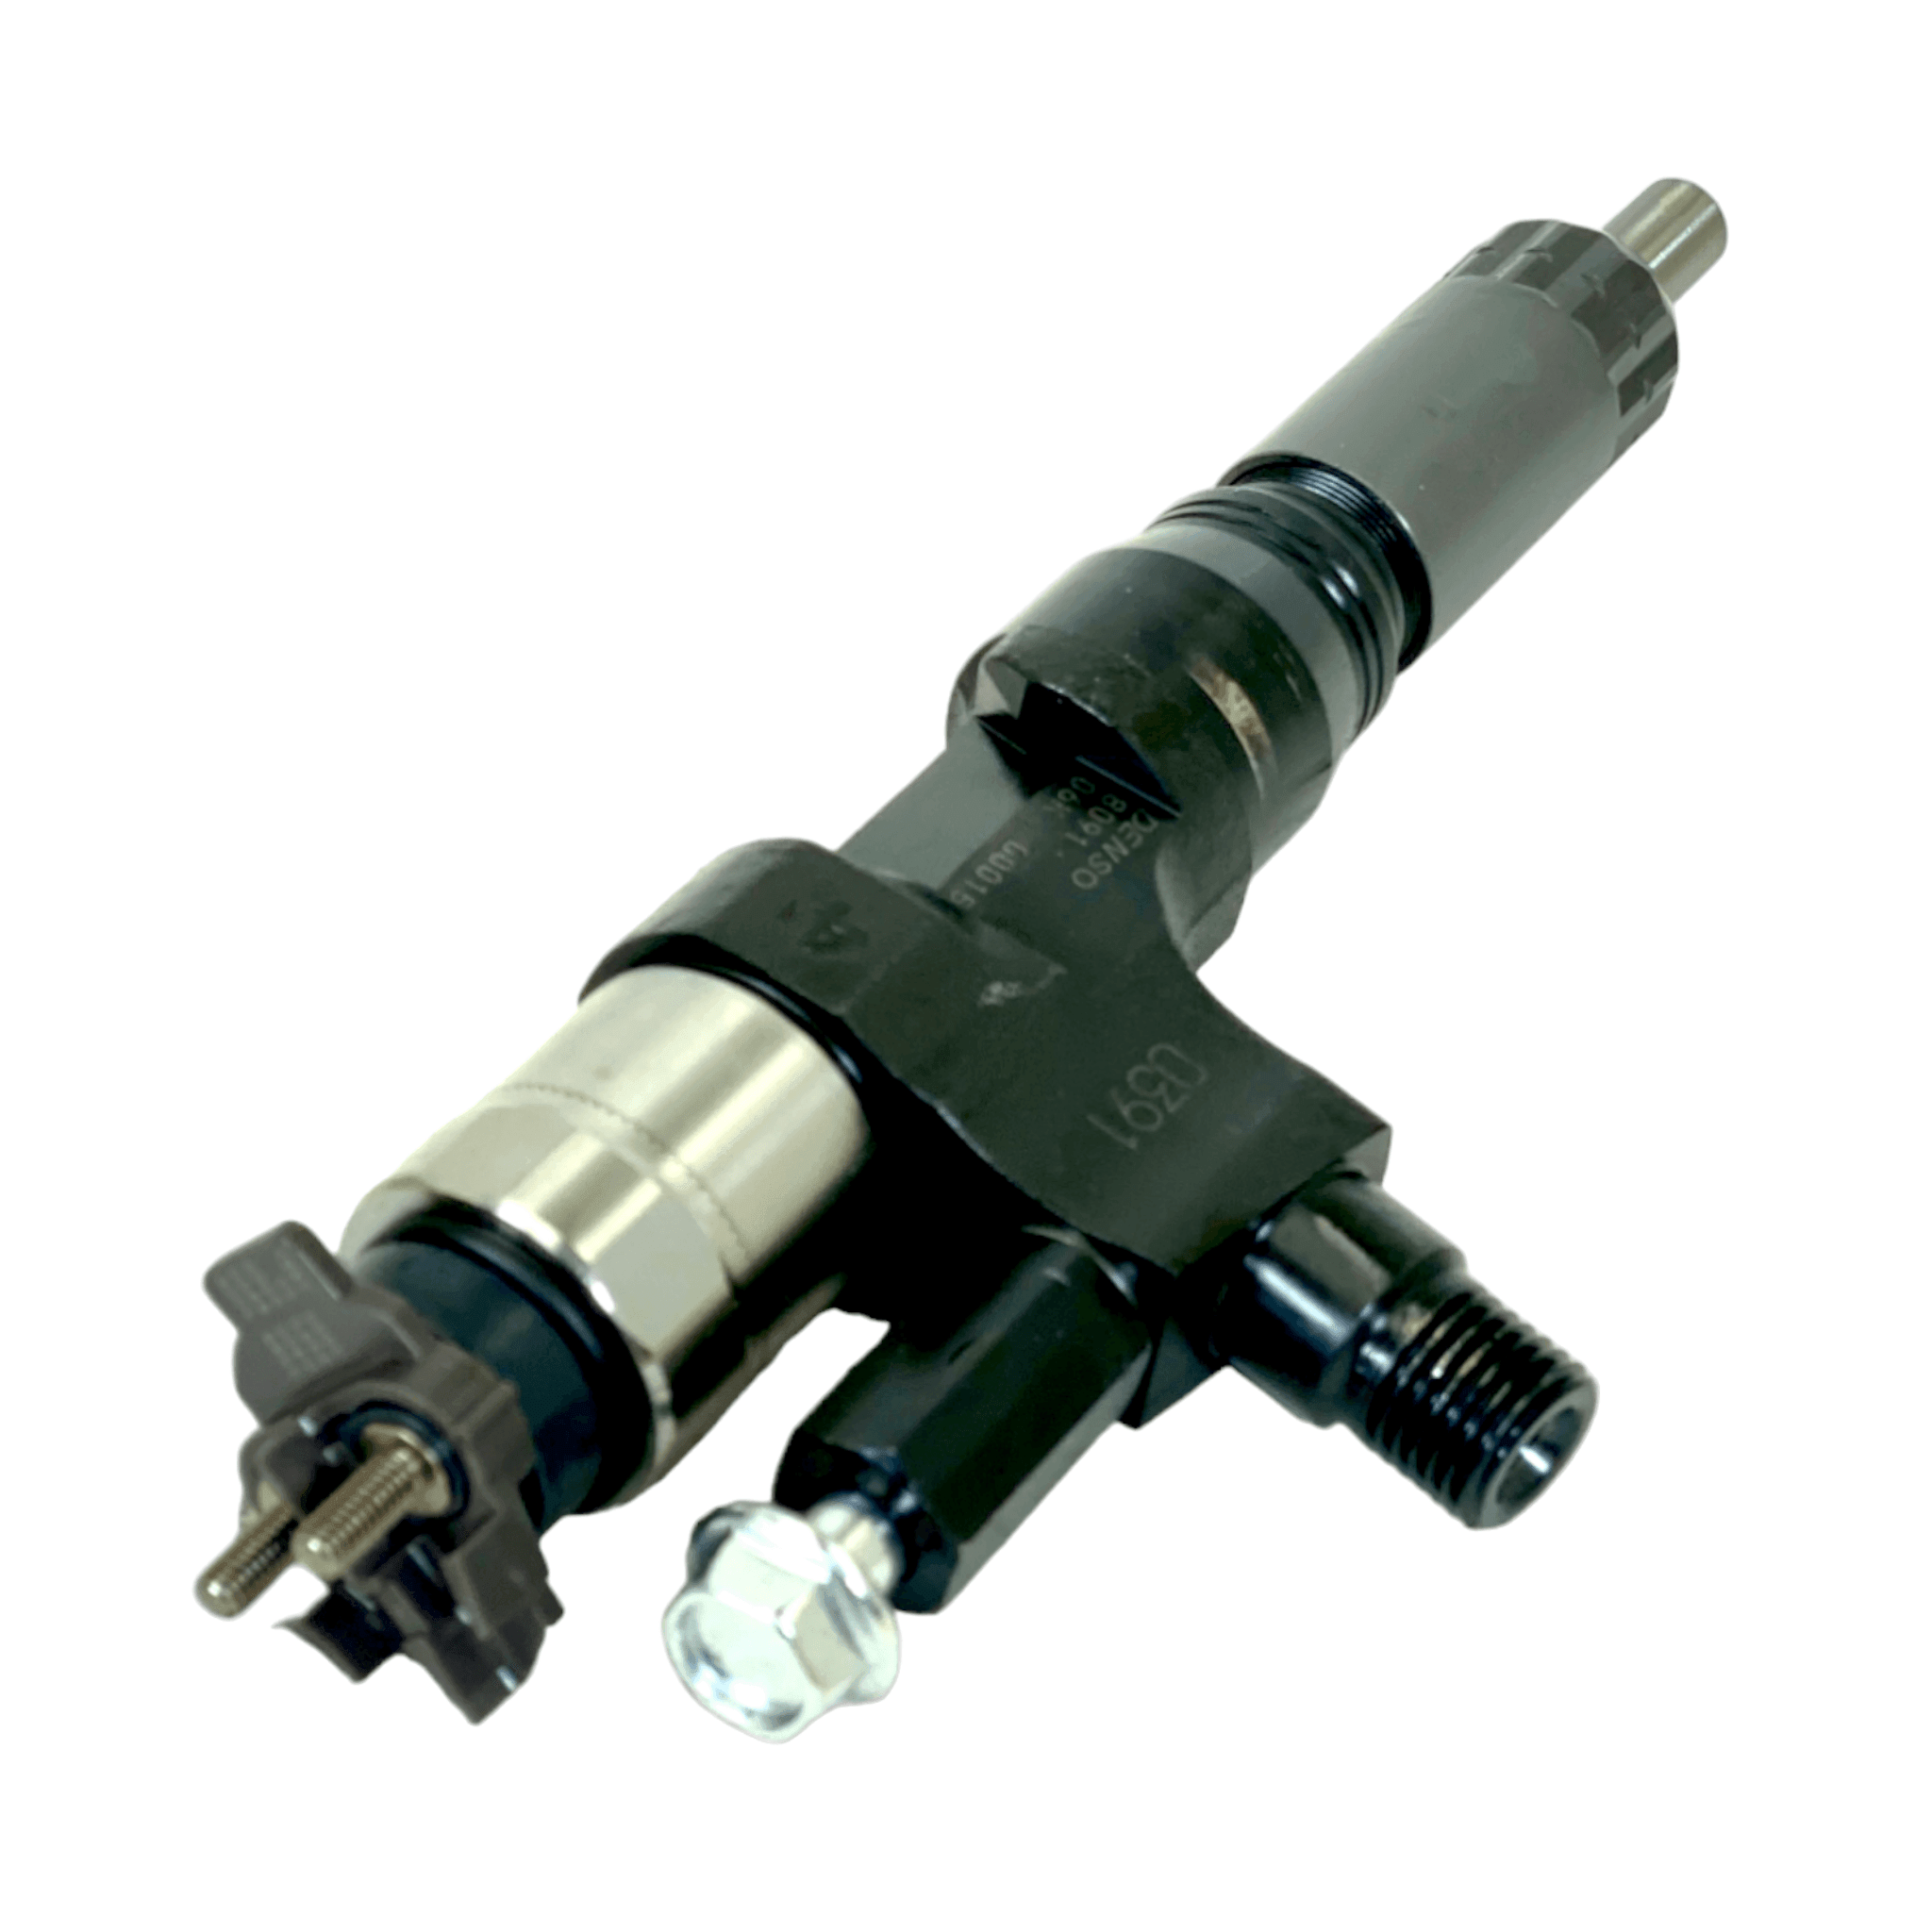 095000-8096 Genuine Hino Fuel Injector - ADVANCED TRUCK PARTS